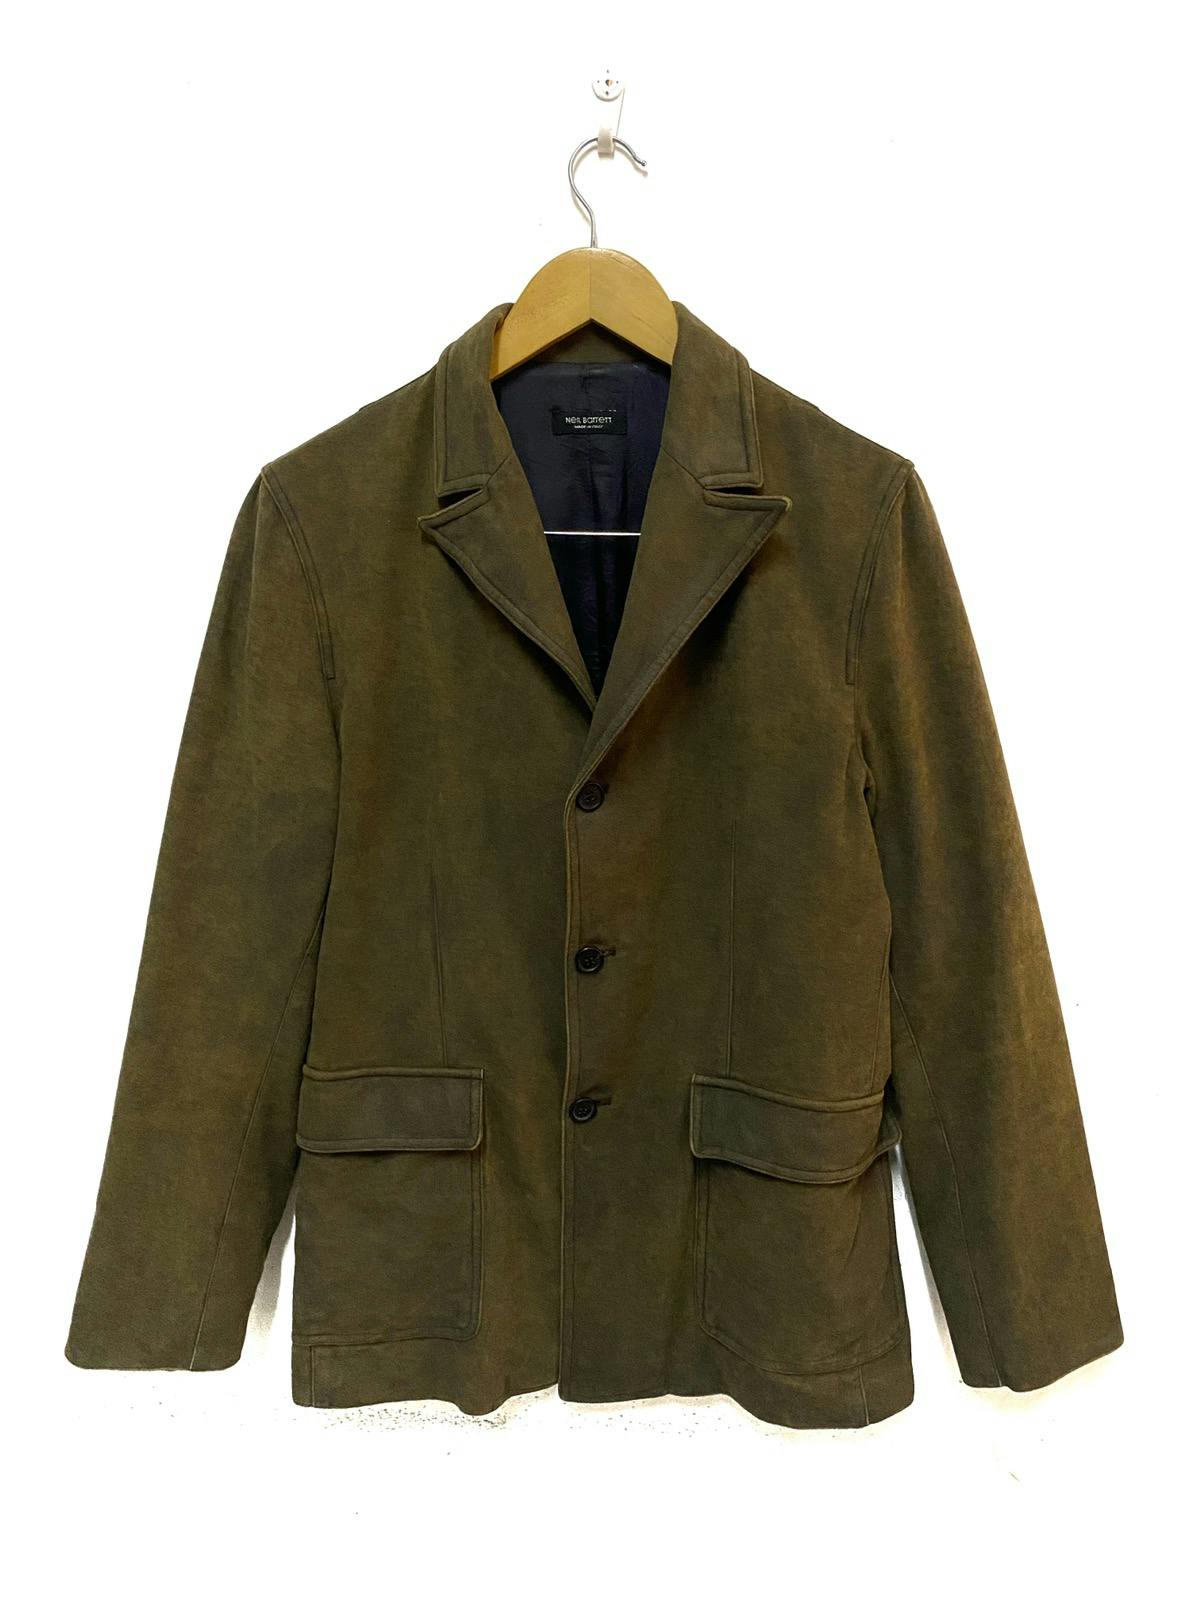 Neil Barrett Jacket Coat Blazer Made in Italy - 1